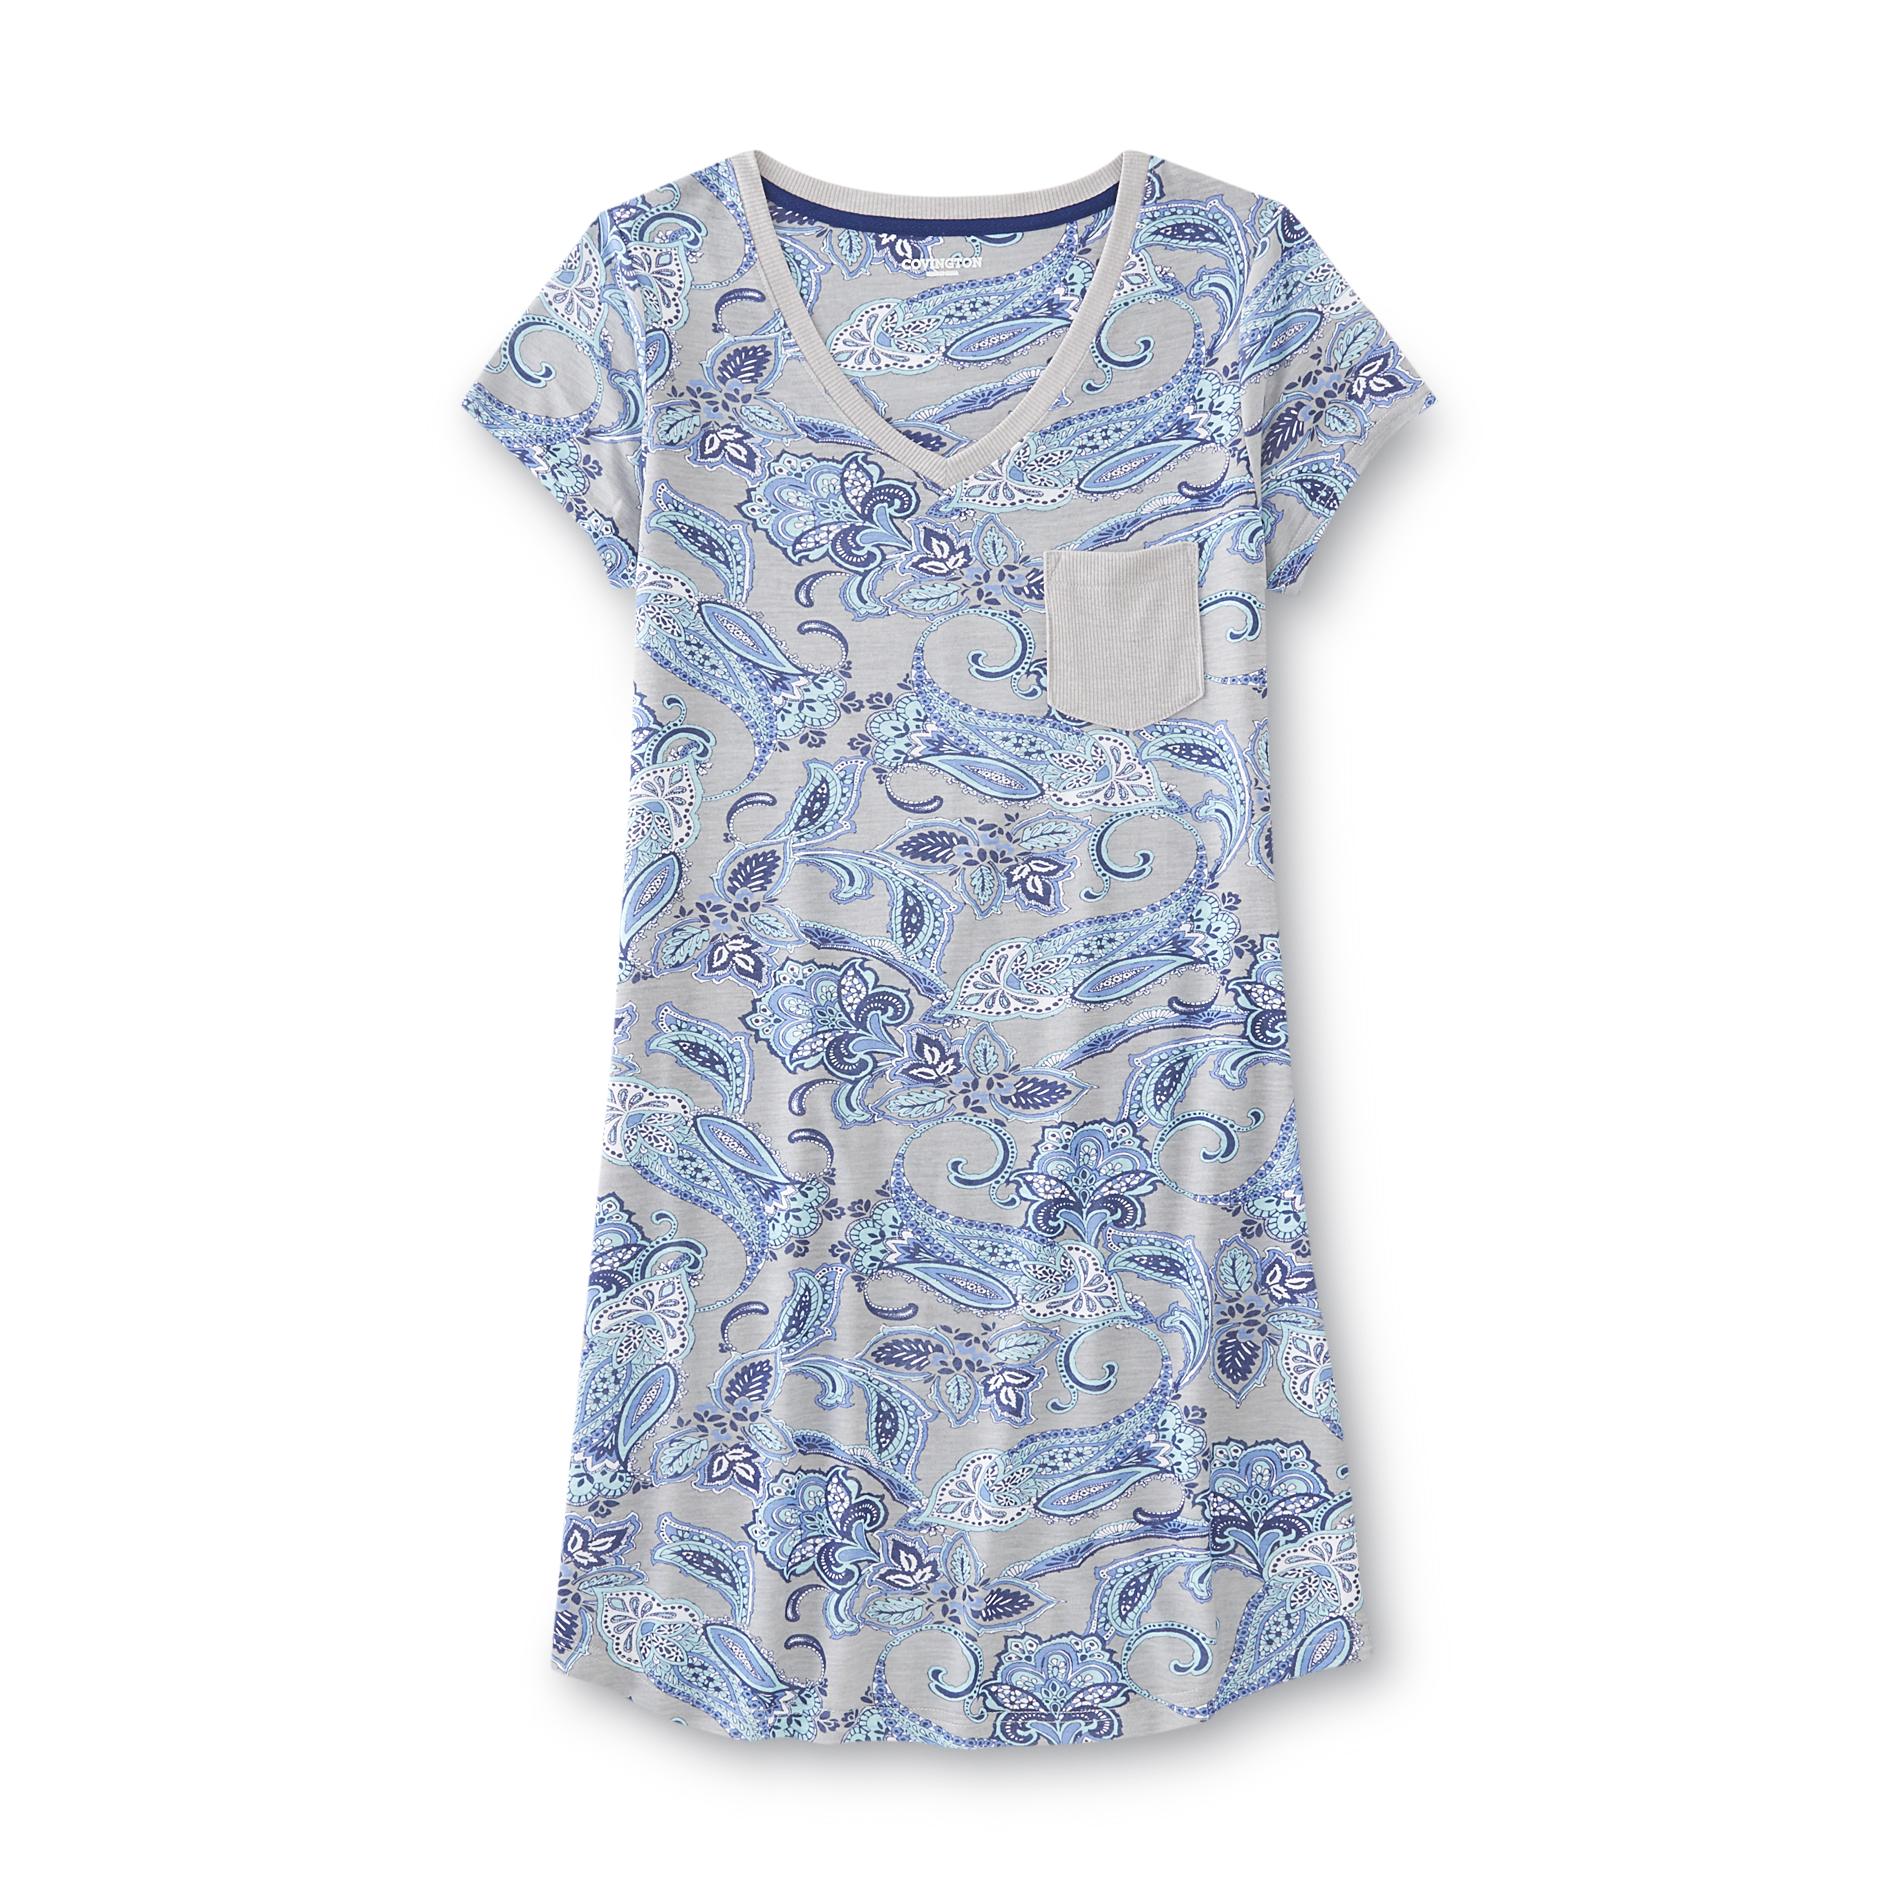 Covington Women's Sleep Shirt - Paisley